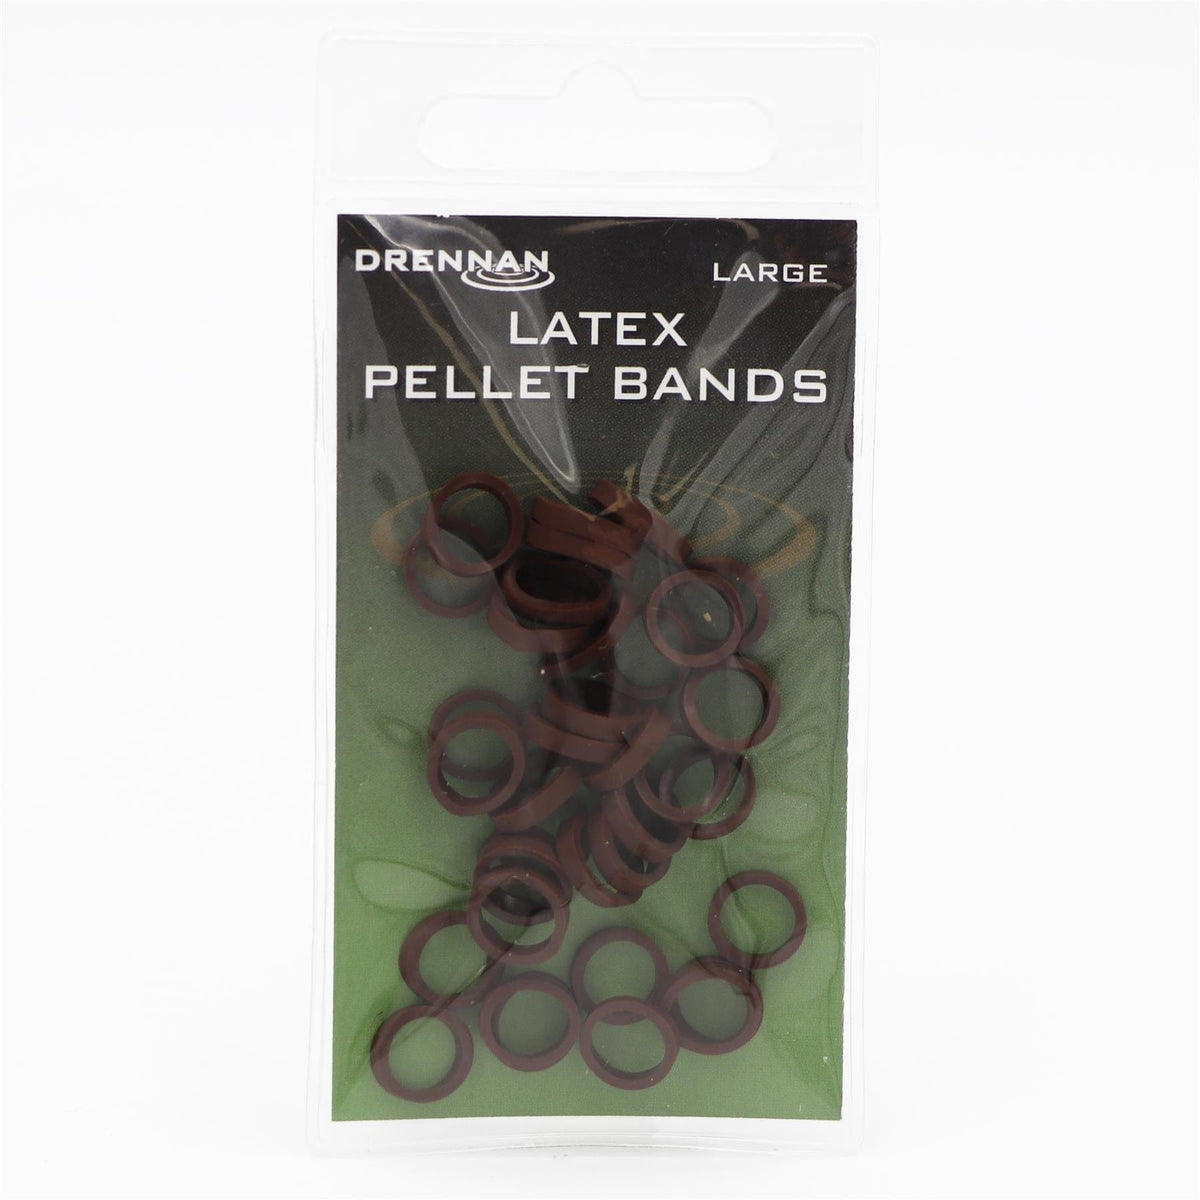 Drennan Latex Pellet Bands.